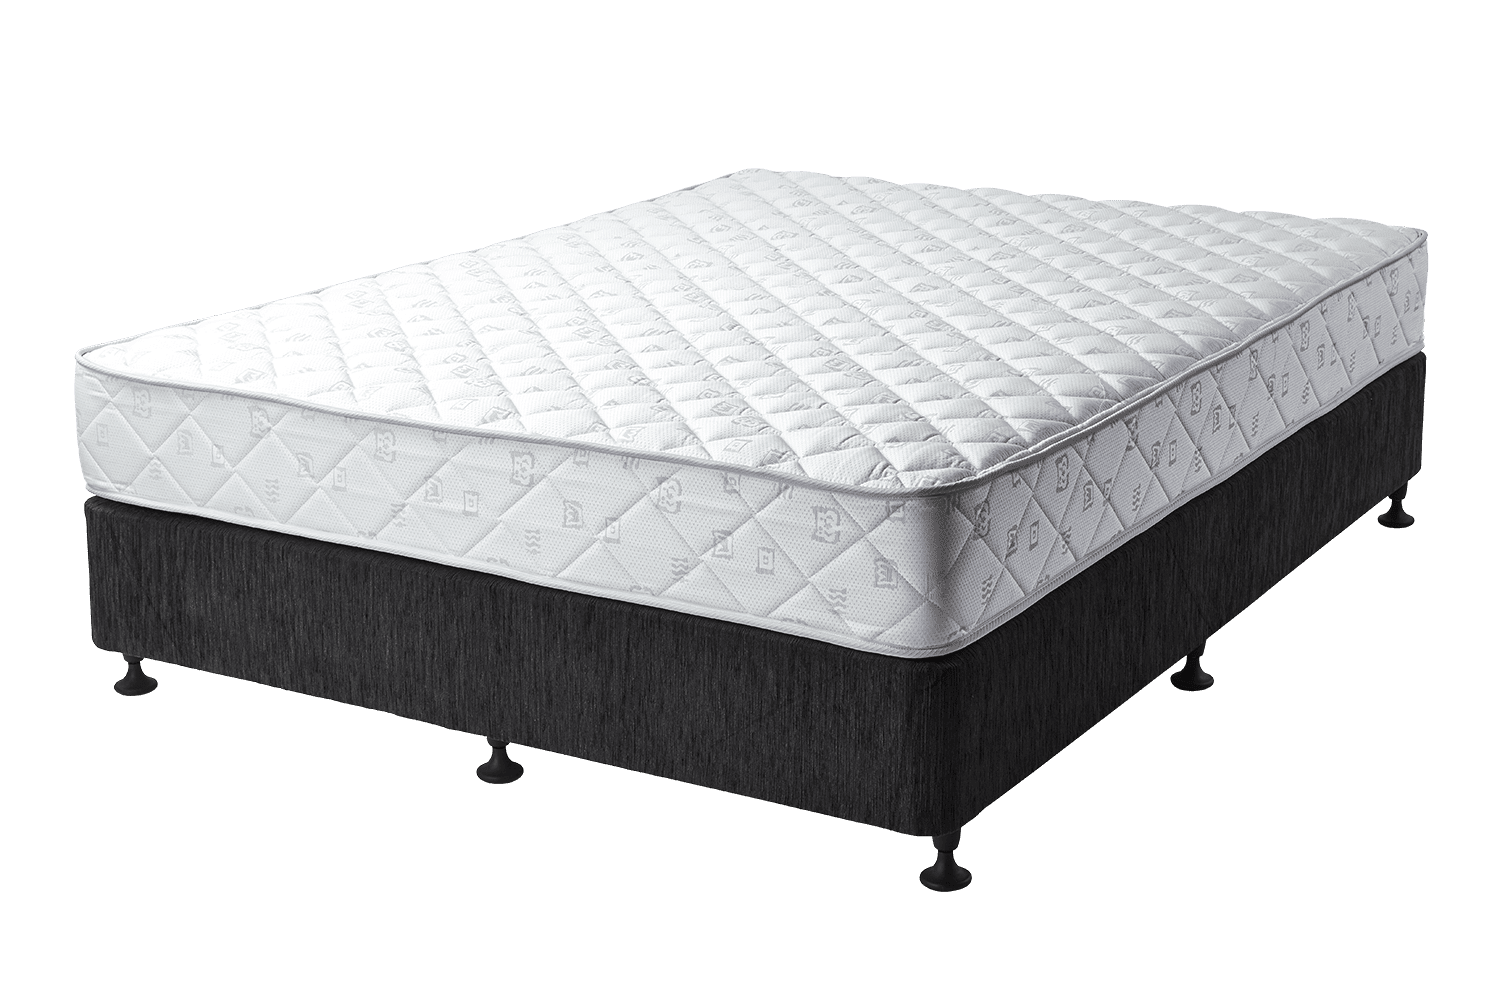 mattresses for sale in northampton